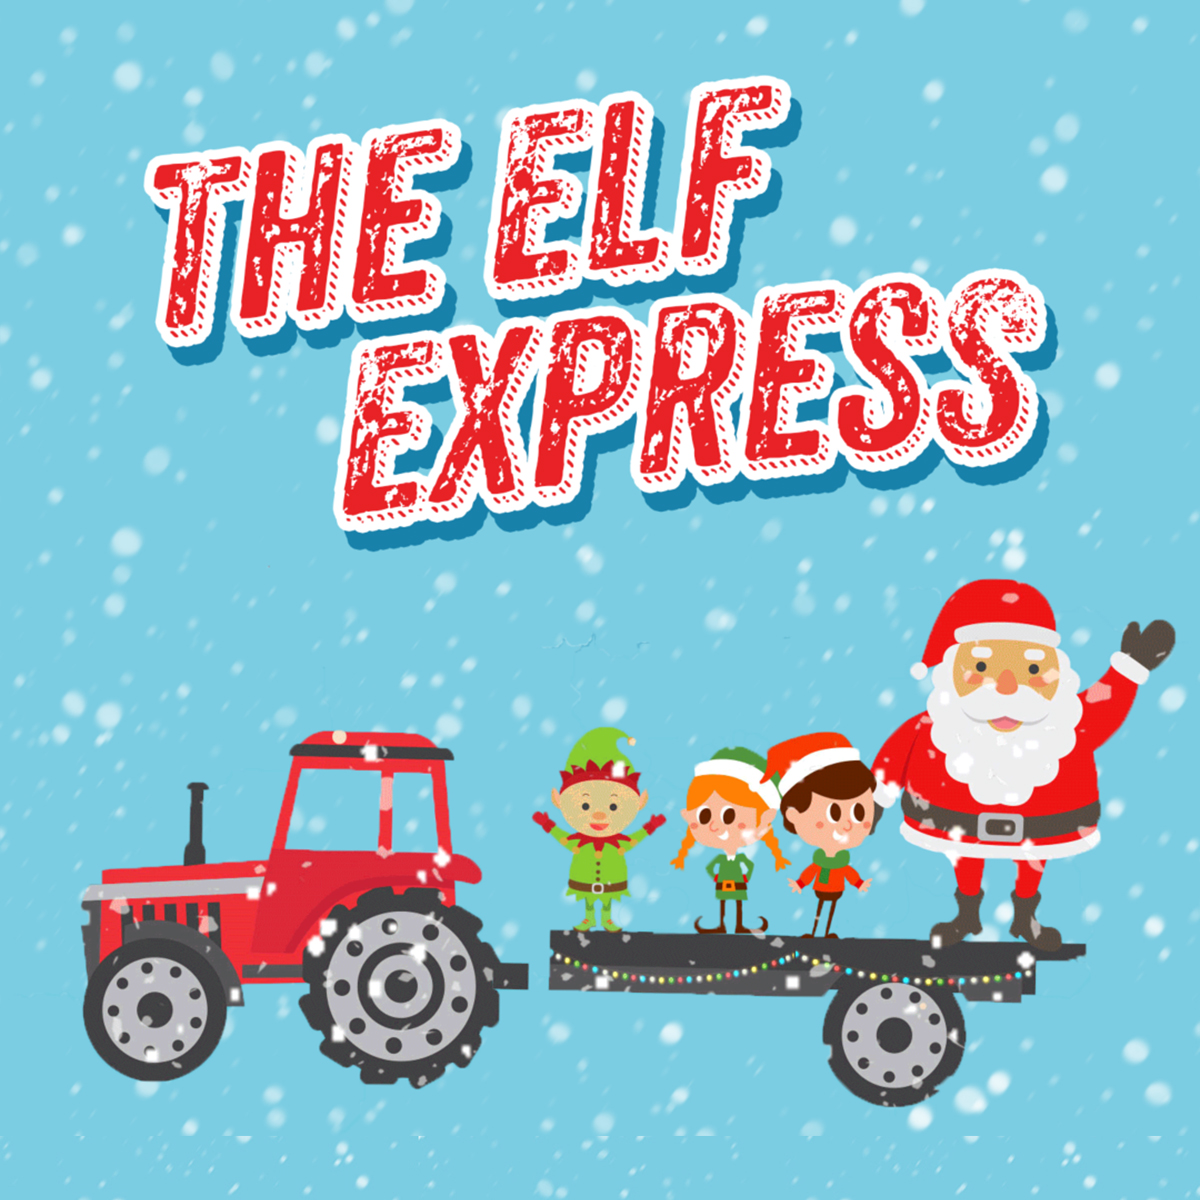 The Elf Express